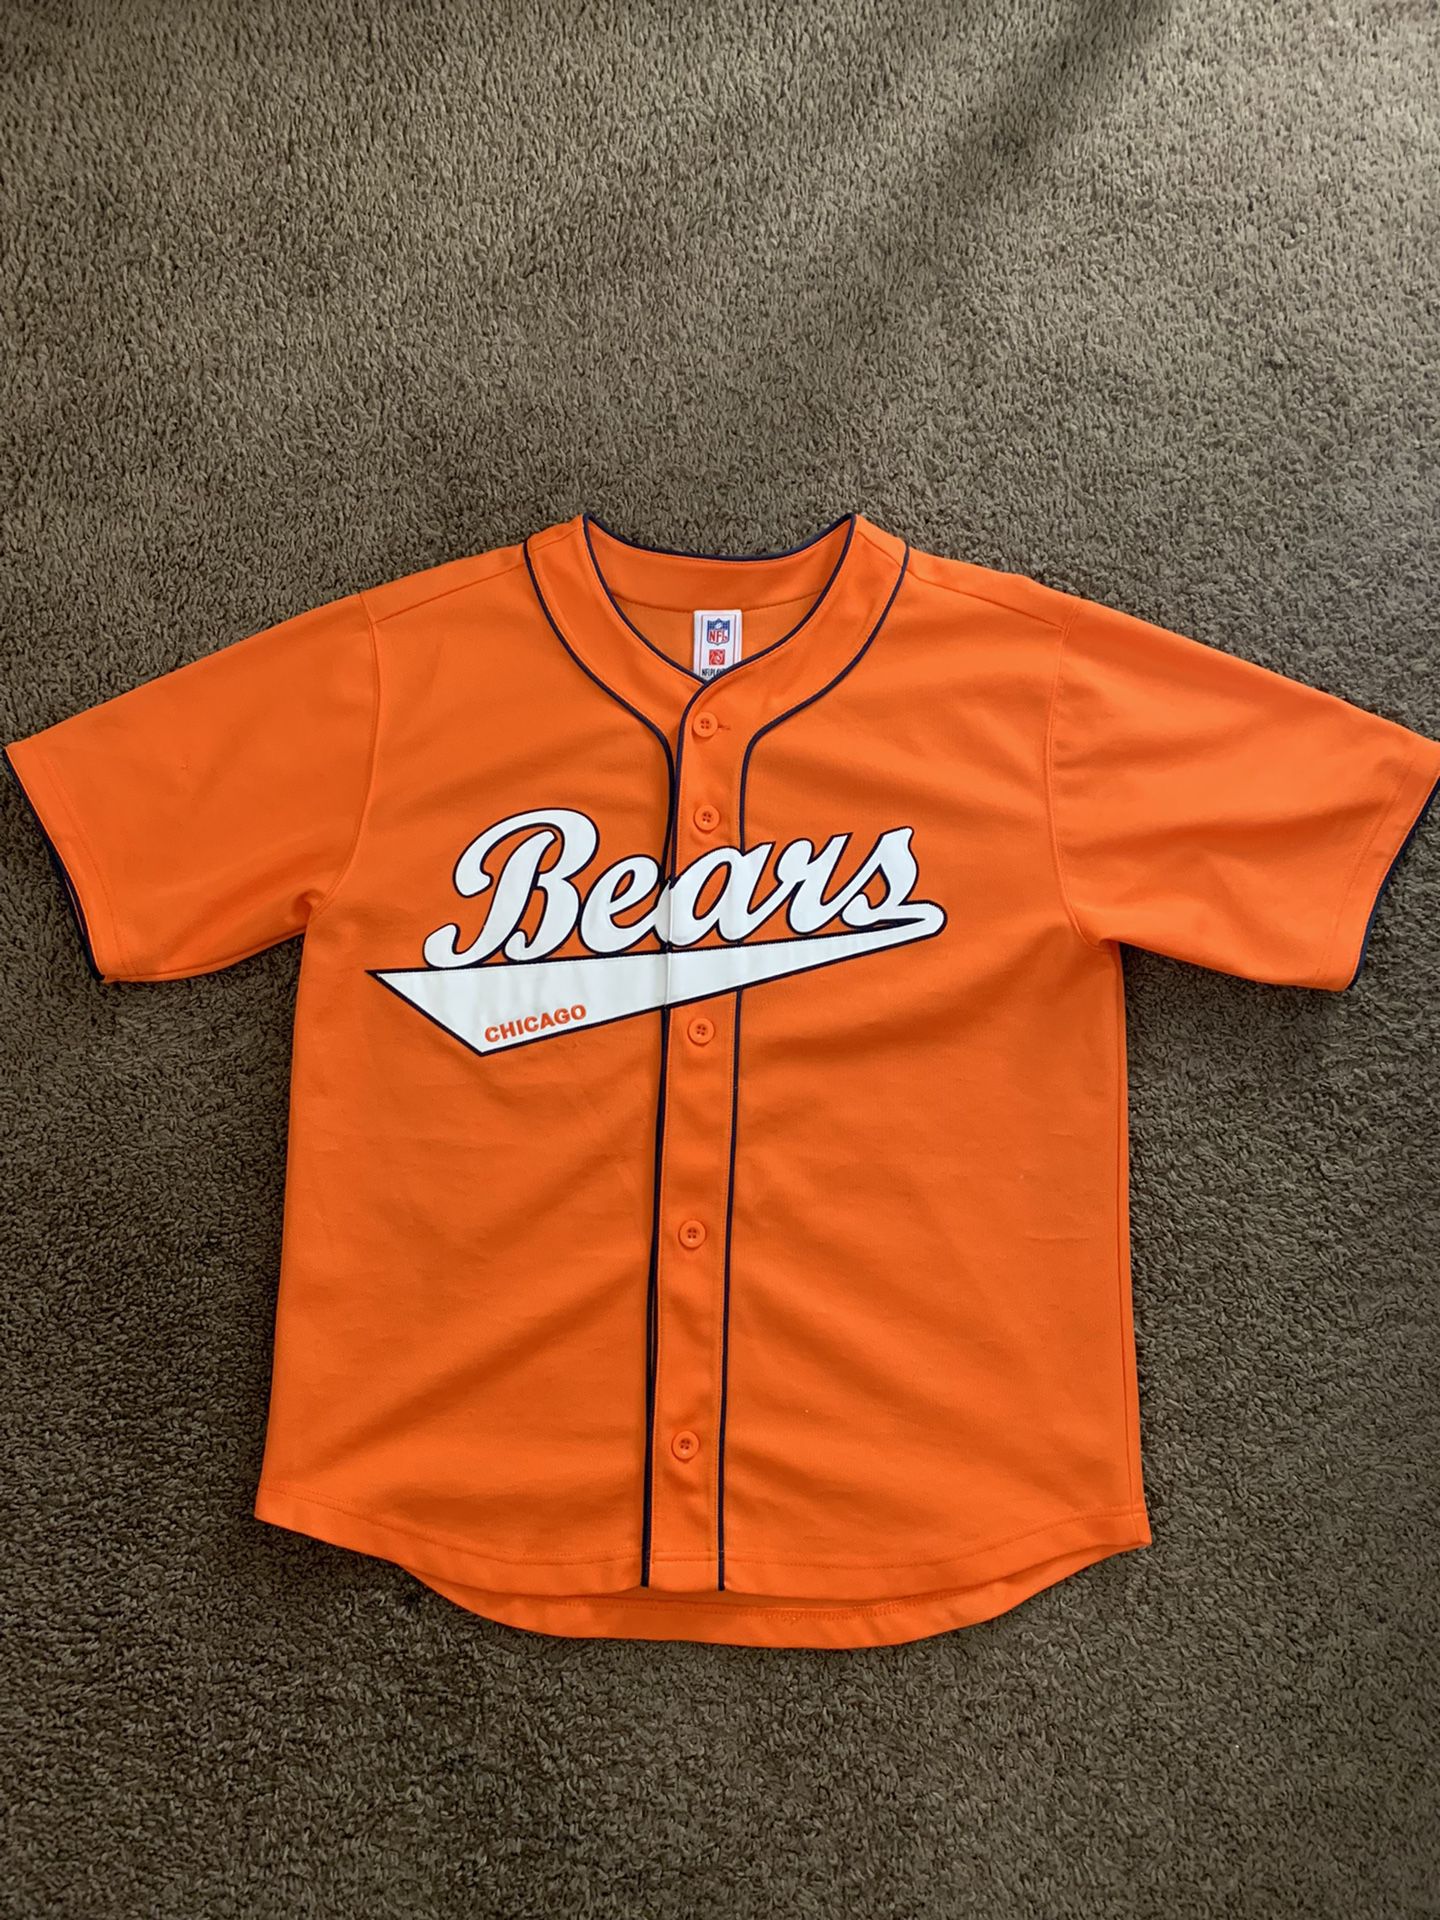 chicago bears baseball shirt